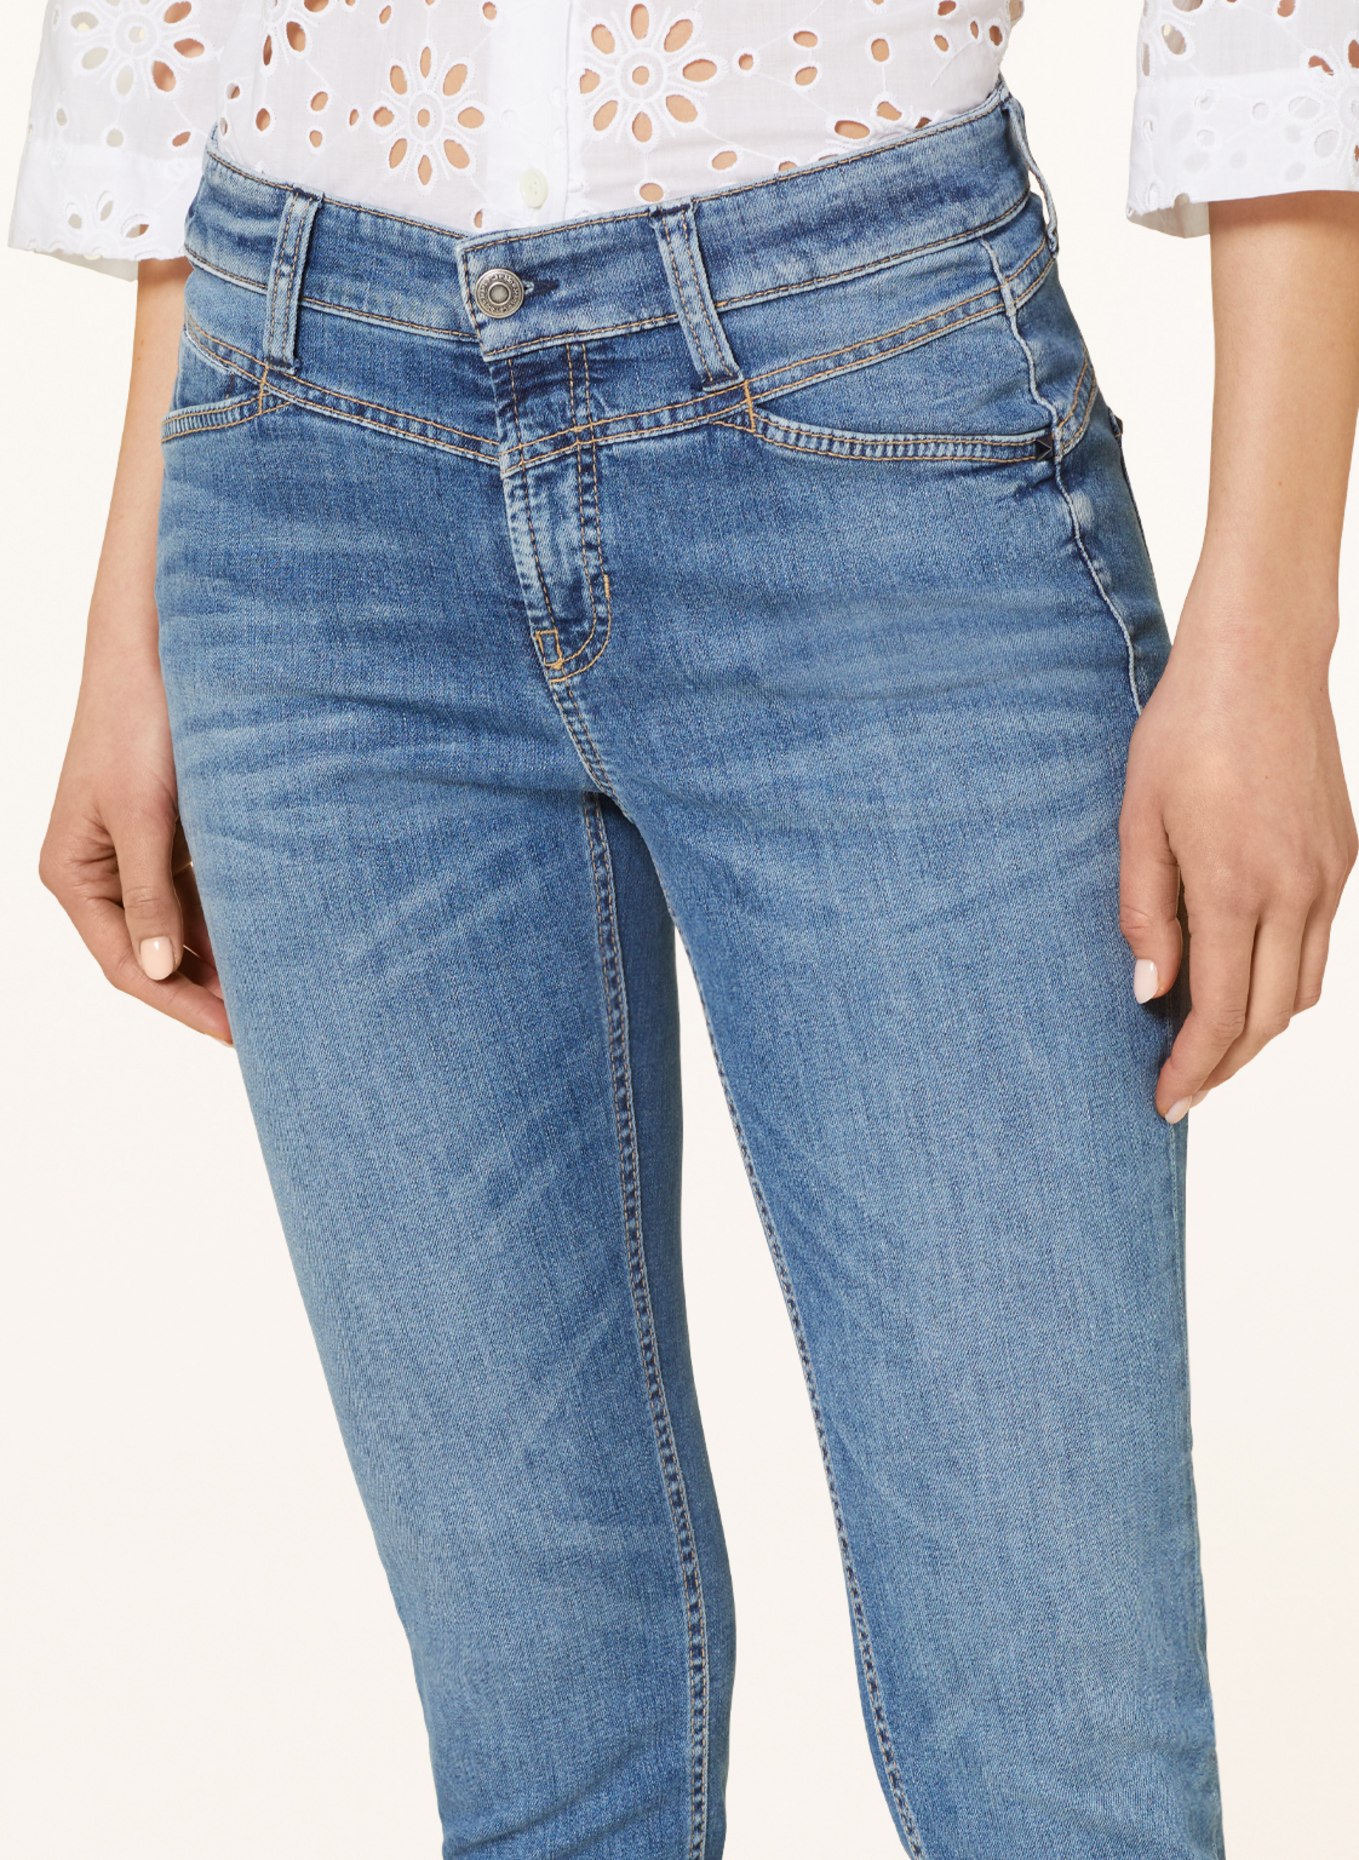 CAMBIO Skinny jeans PARLA SEAM, Color: 5259 feminine well worn (Image 5)